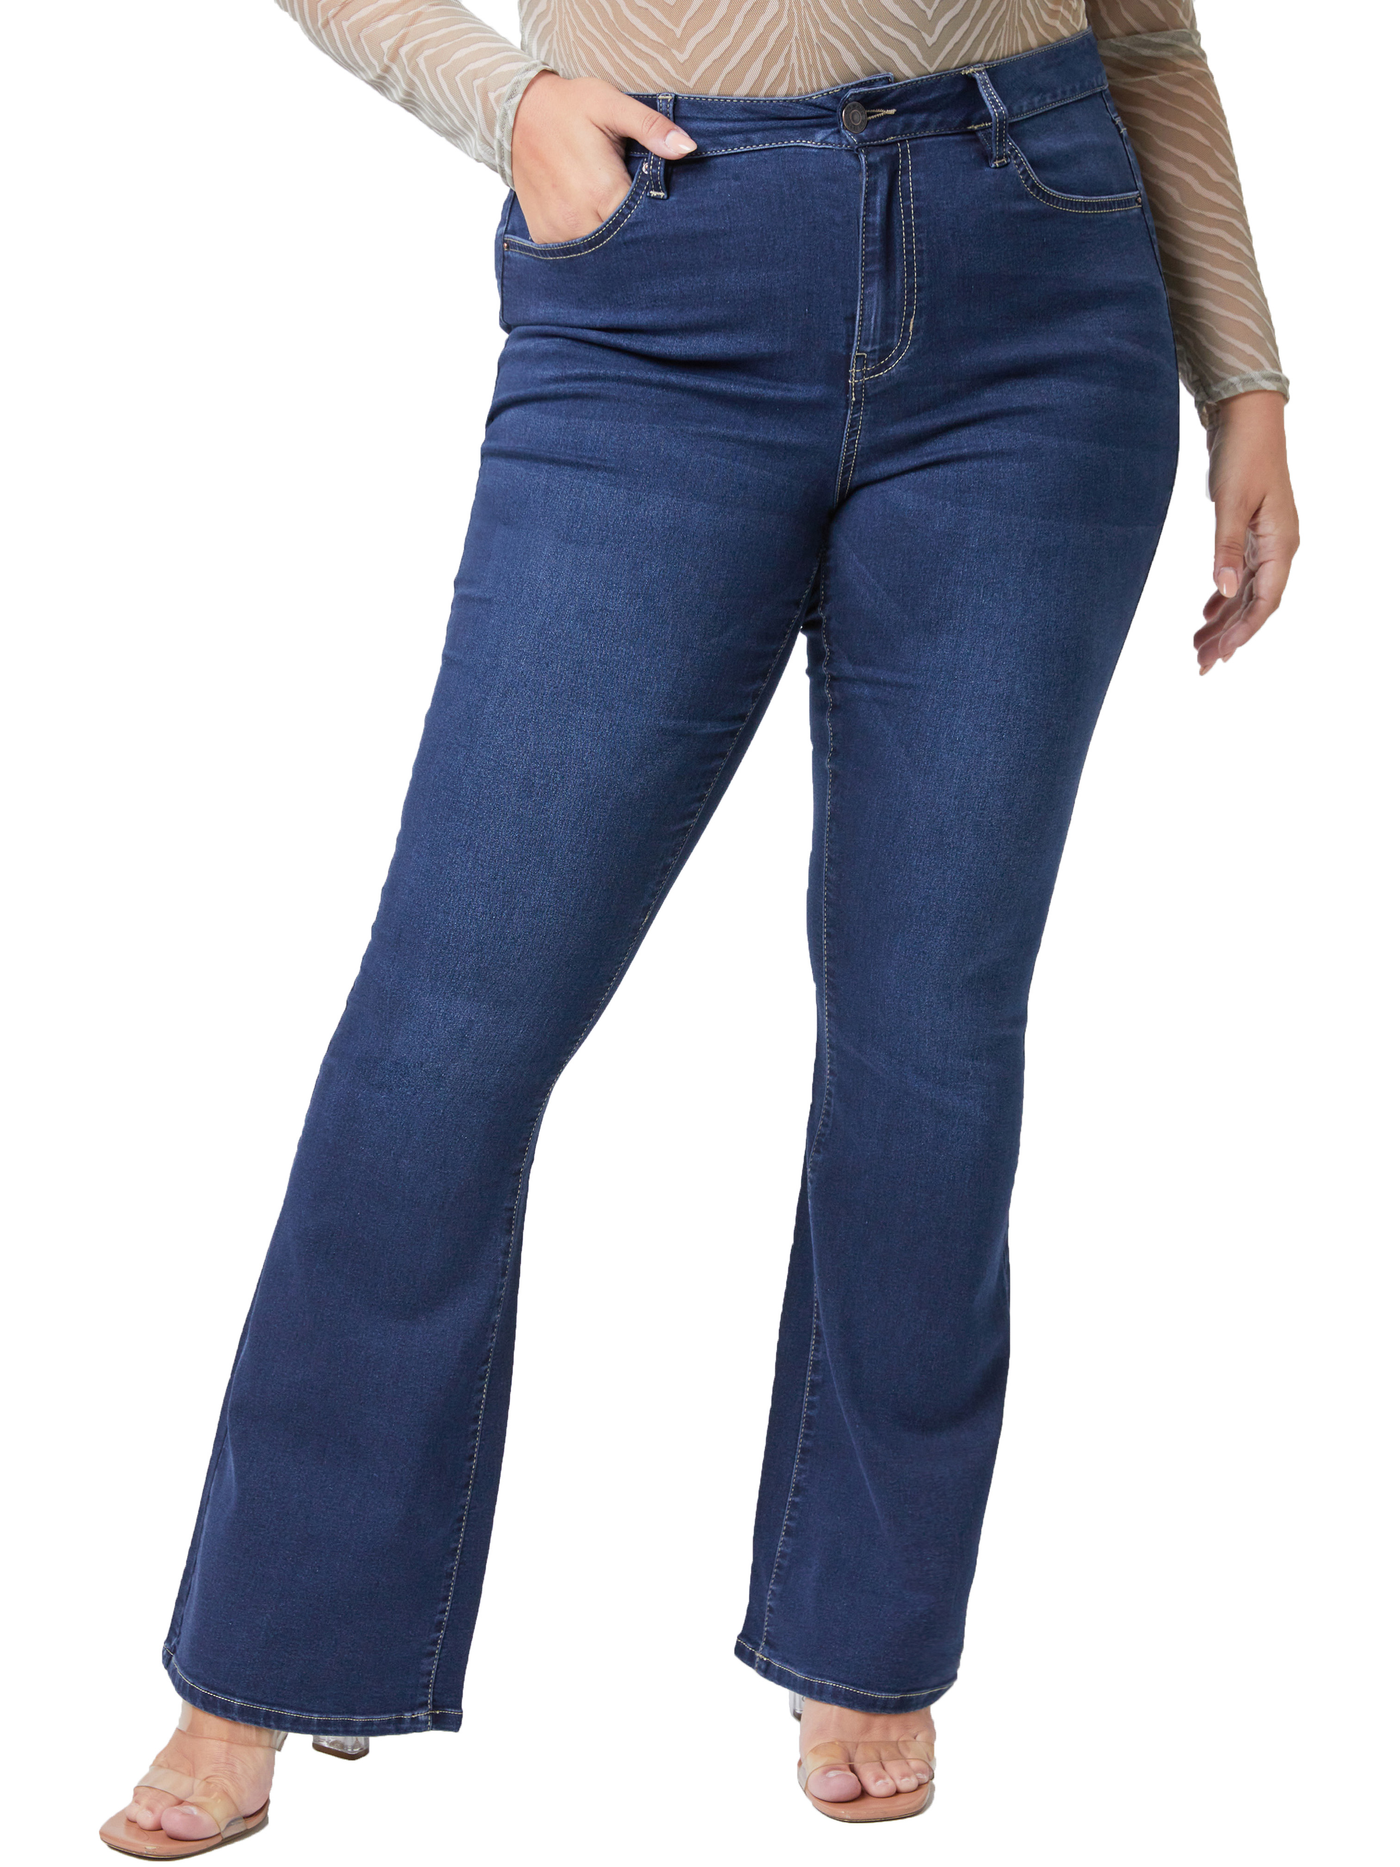 Plus Size Women's Essential HyperDenim Flare Jeans